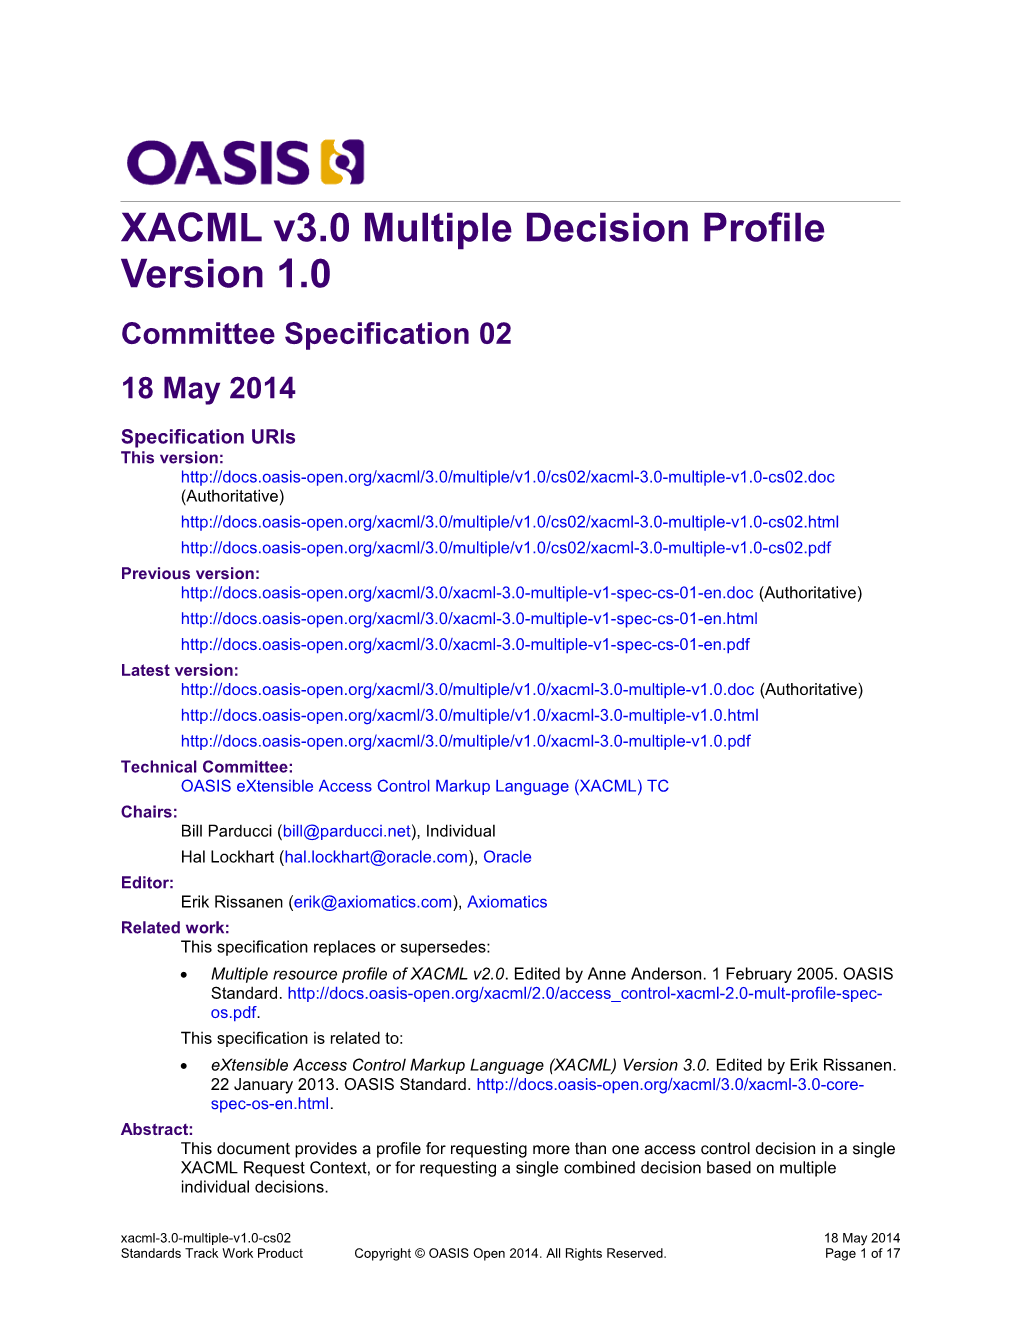 XACML V3.0 Multiple Decision Profile Version 1.0